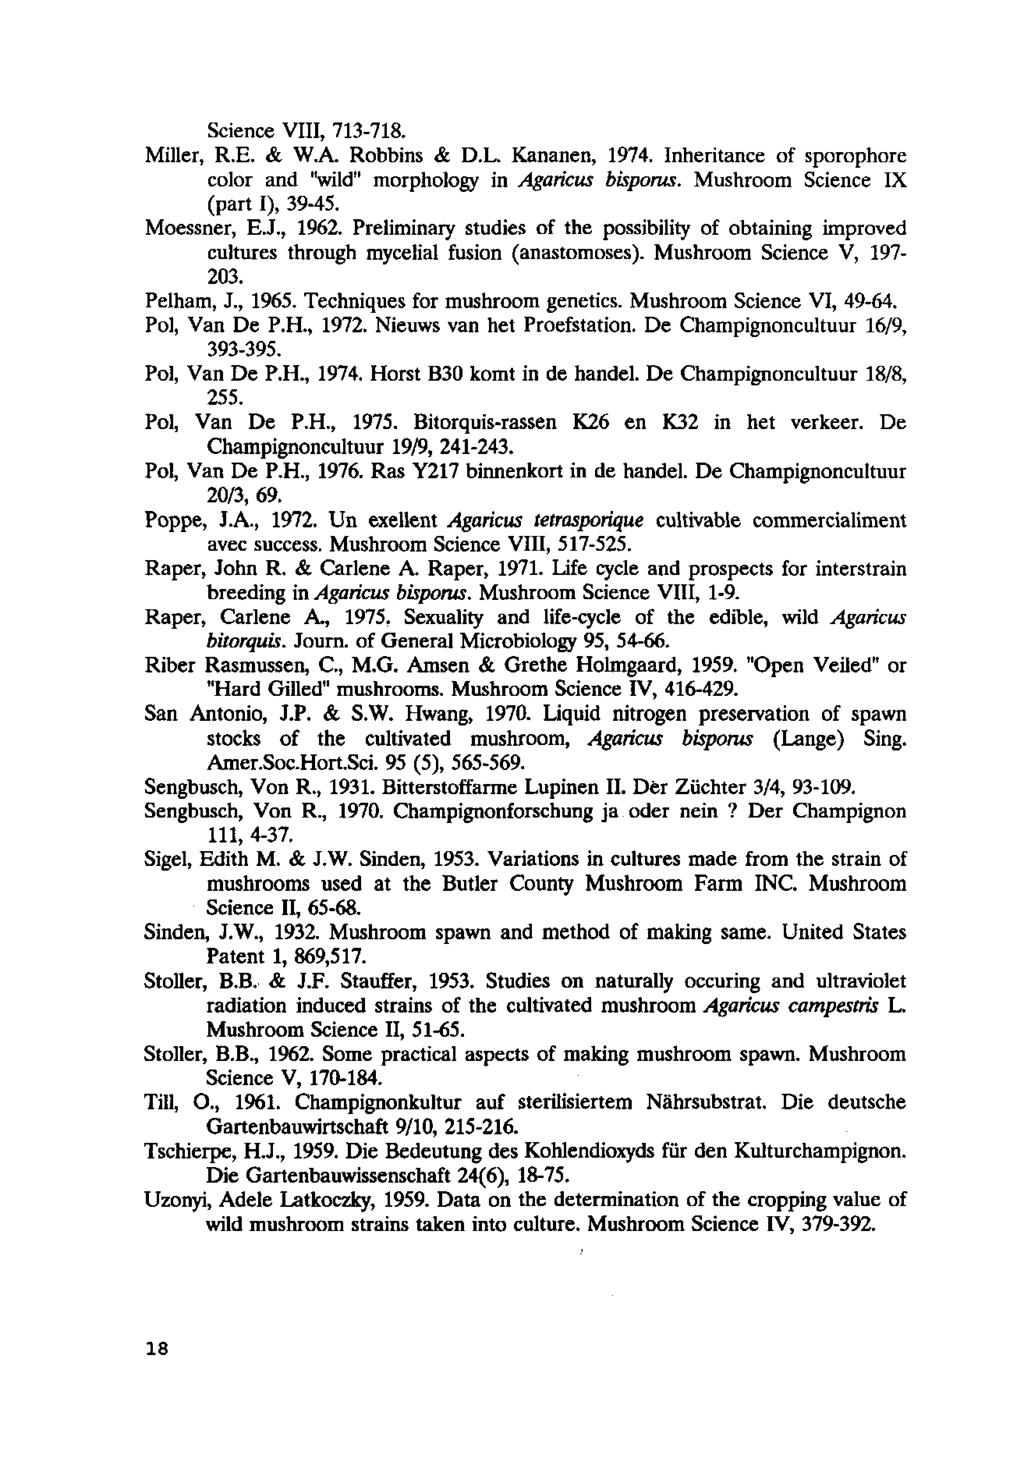 Science VIII, 713-718. Miller, R.E. & W.A. Robbins & D.L. Kananen, 1974. Inheritance of sporophore color and "wild" morphology in Agaricus bisporus. Mushroom Science IX (part I),39-45. Moessner, E.J.